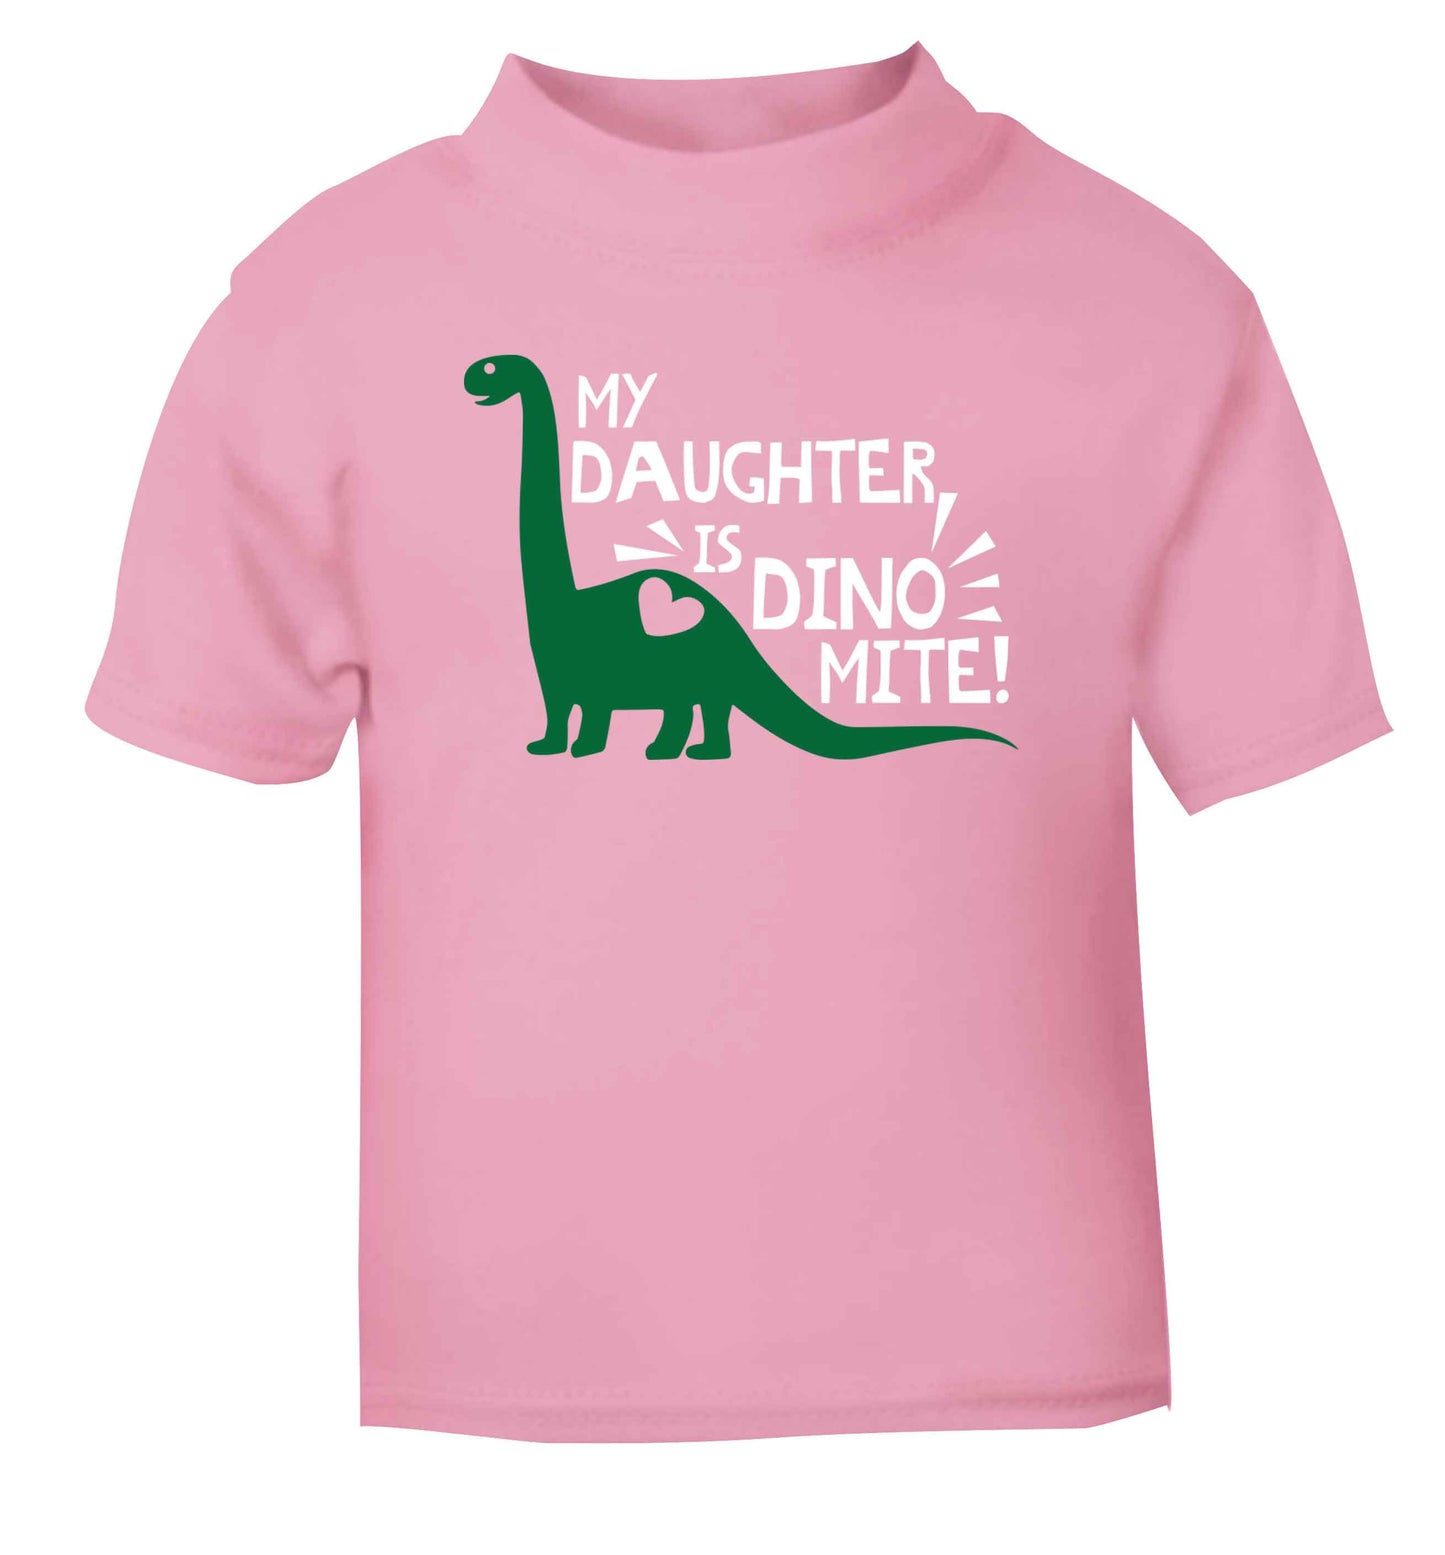 My daughter is dinomite! light pink Baby Toddler Tshirt 2 Years